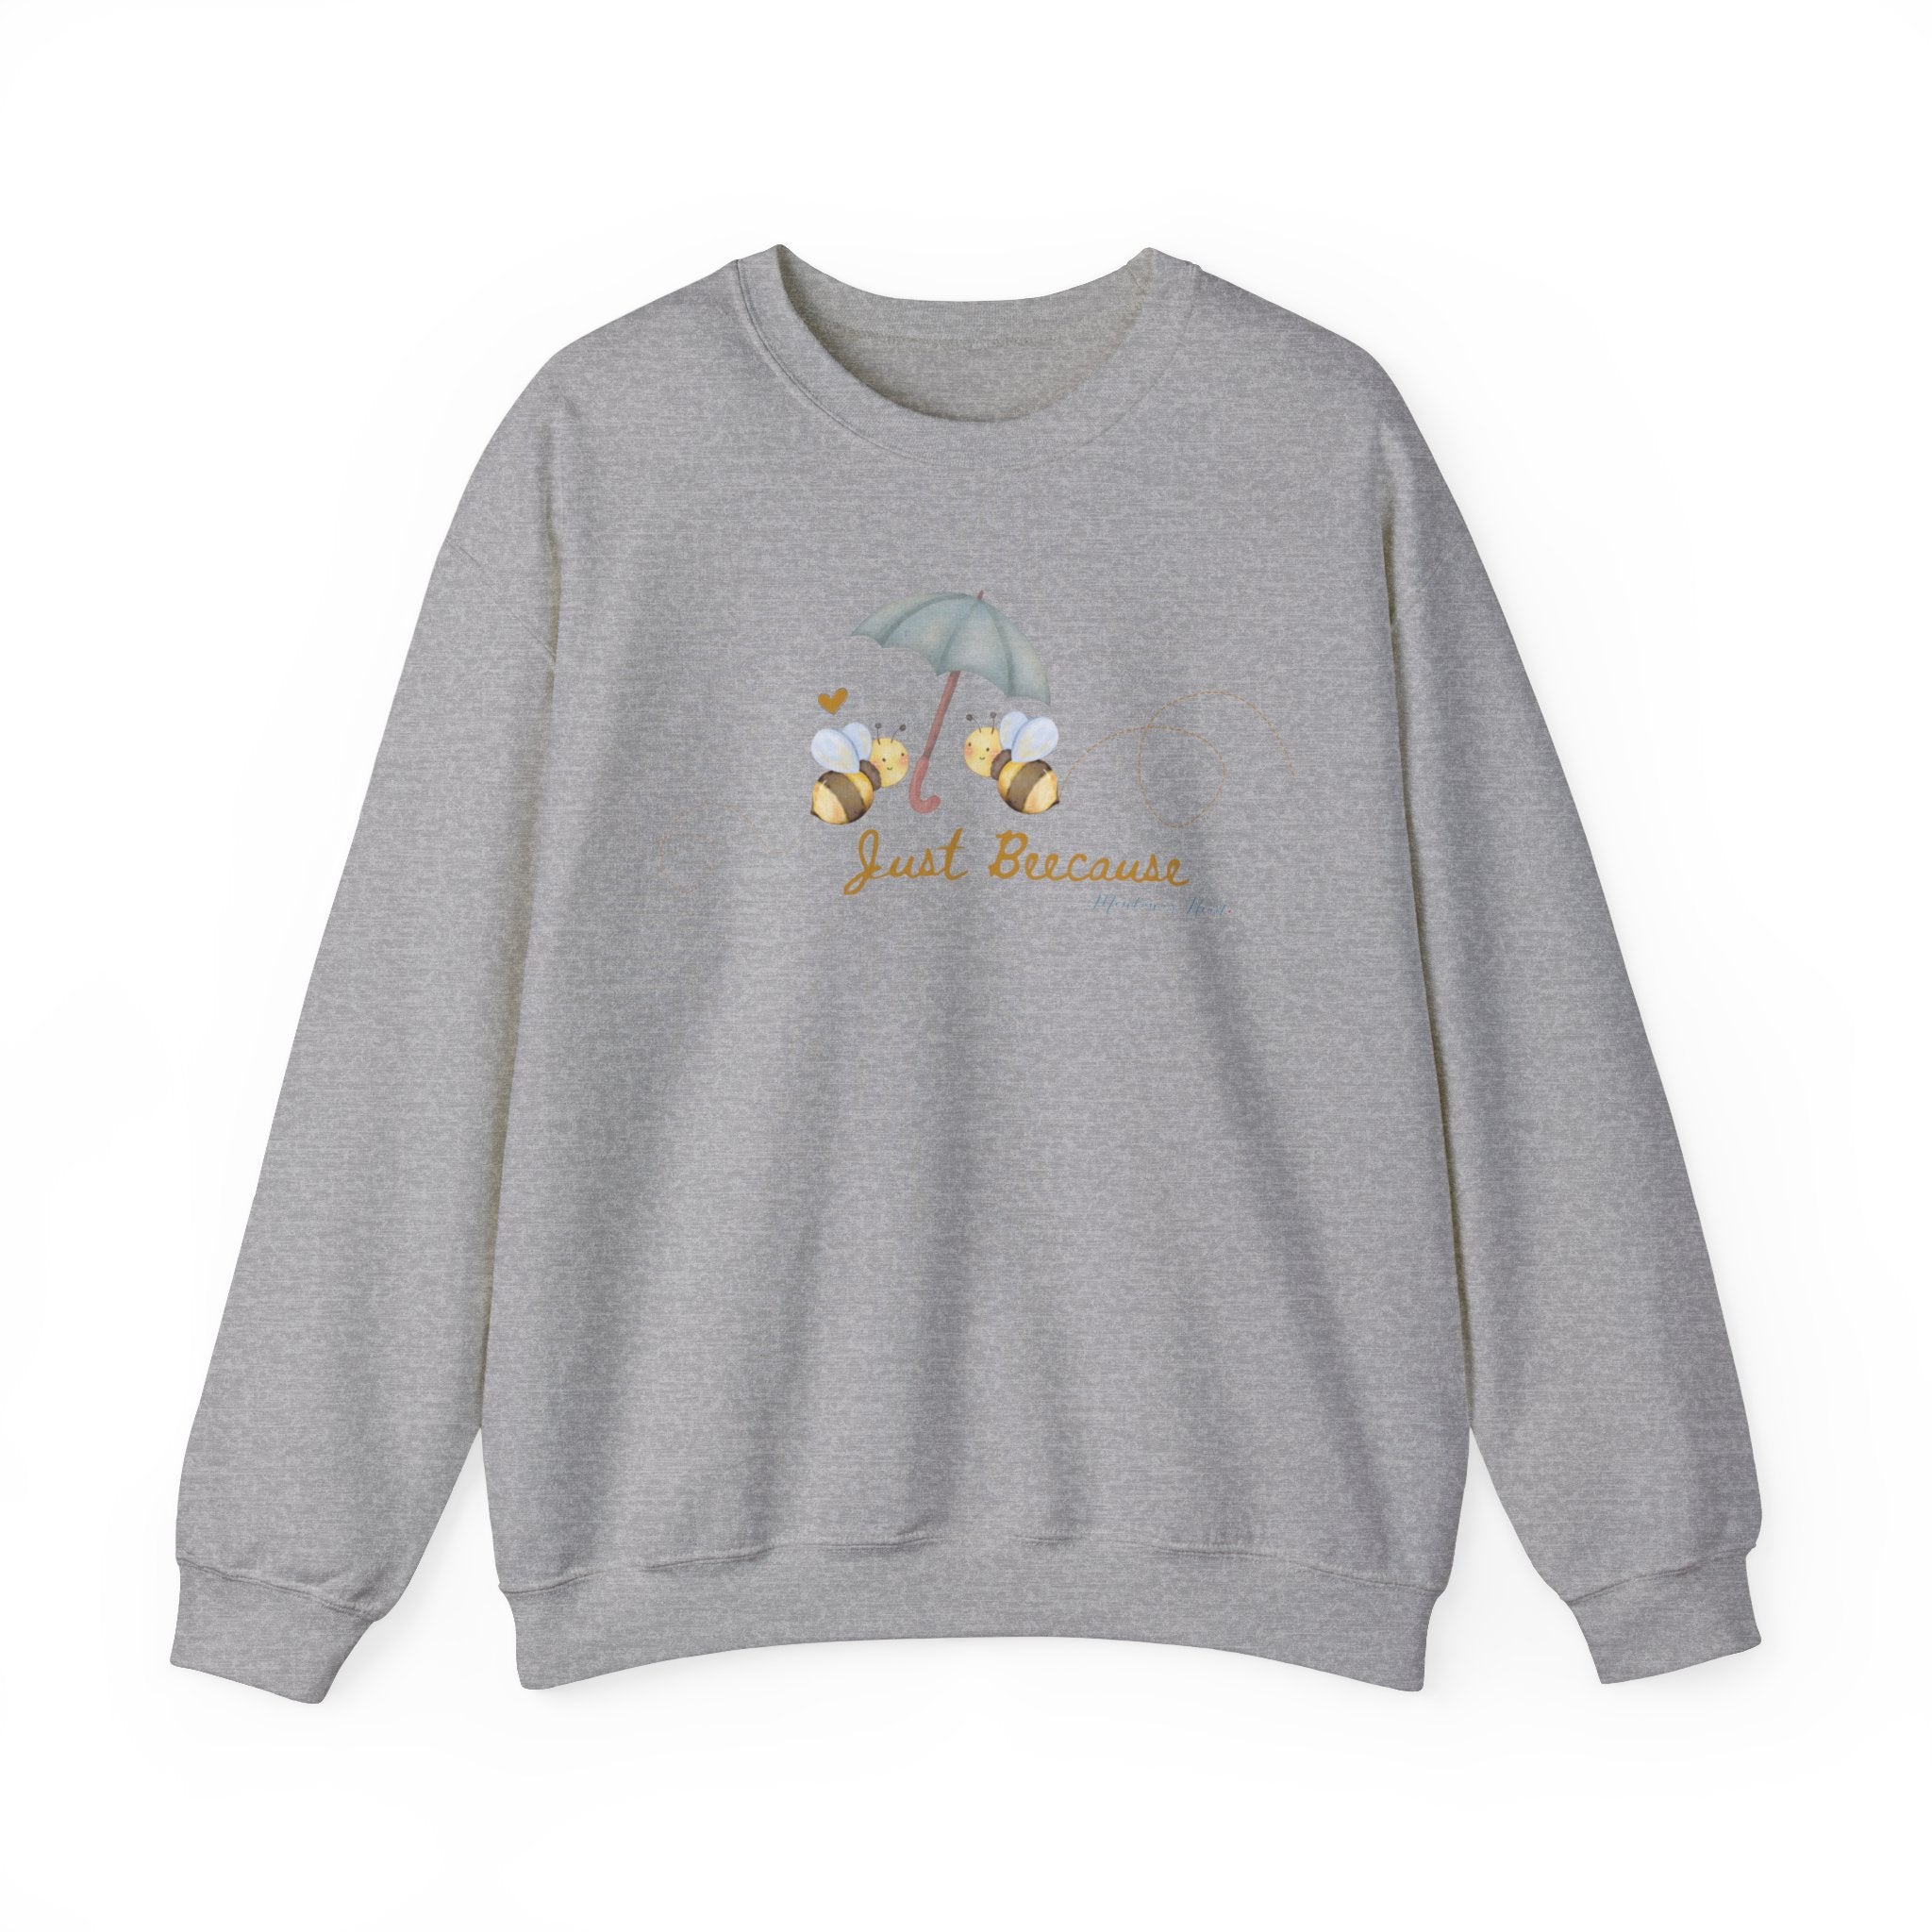 Just Beecause bumblebee inspired ladies Unisex Sweatshirt